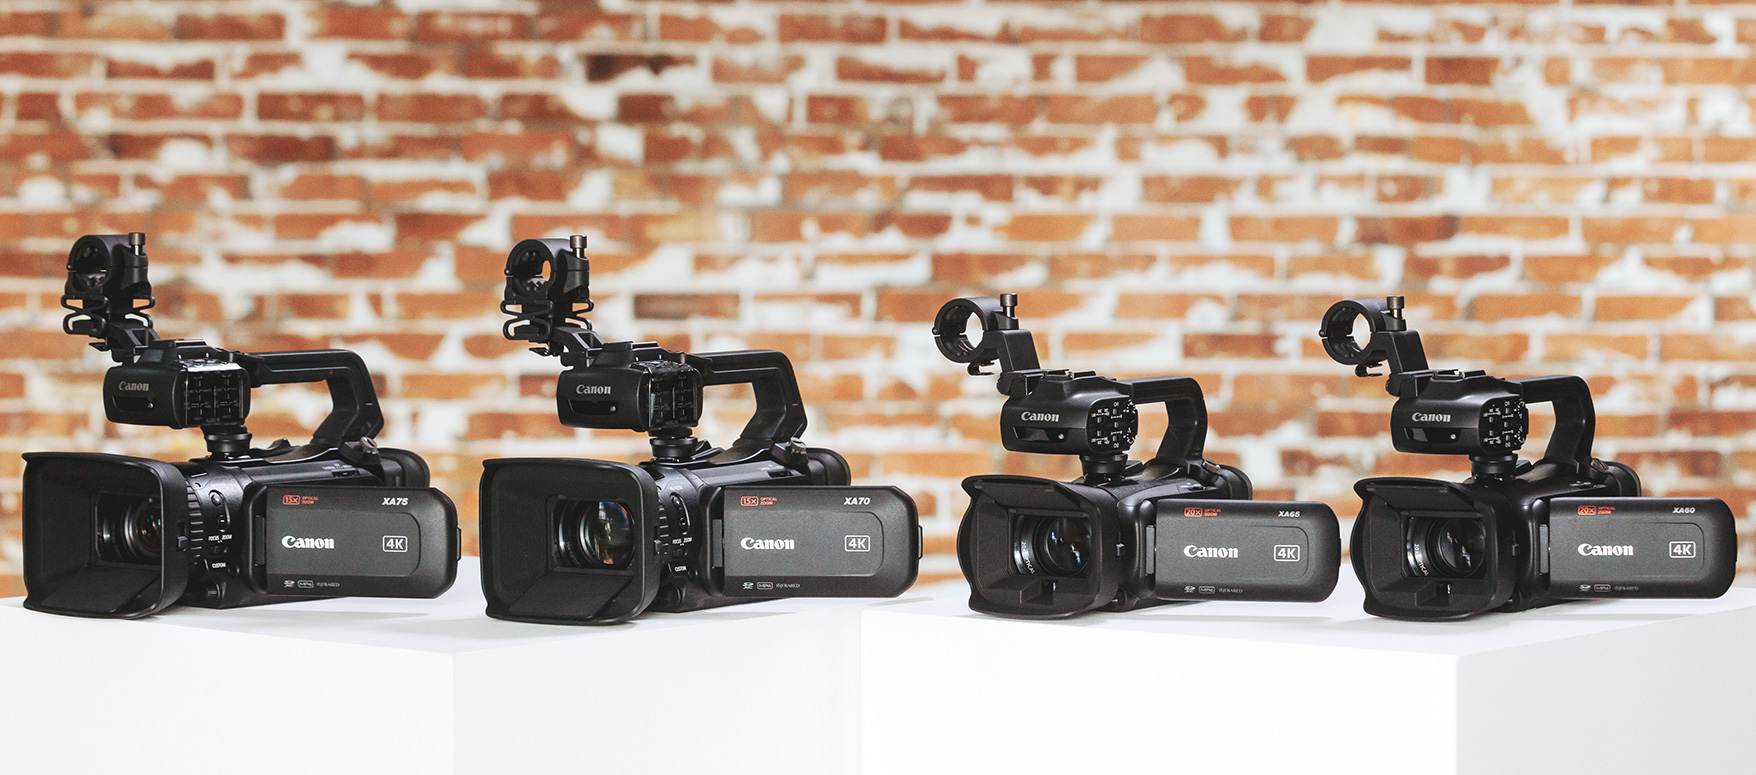 New 4K camcorders from Canon: XA60/65, XA70/75 and LEGRIA HF G70